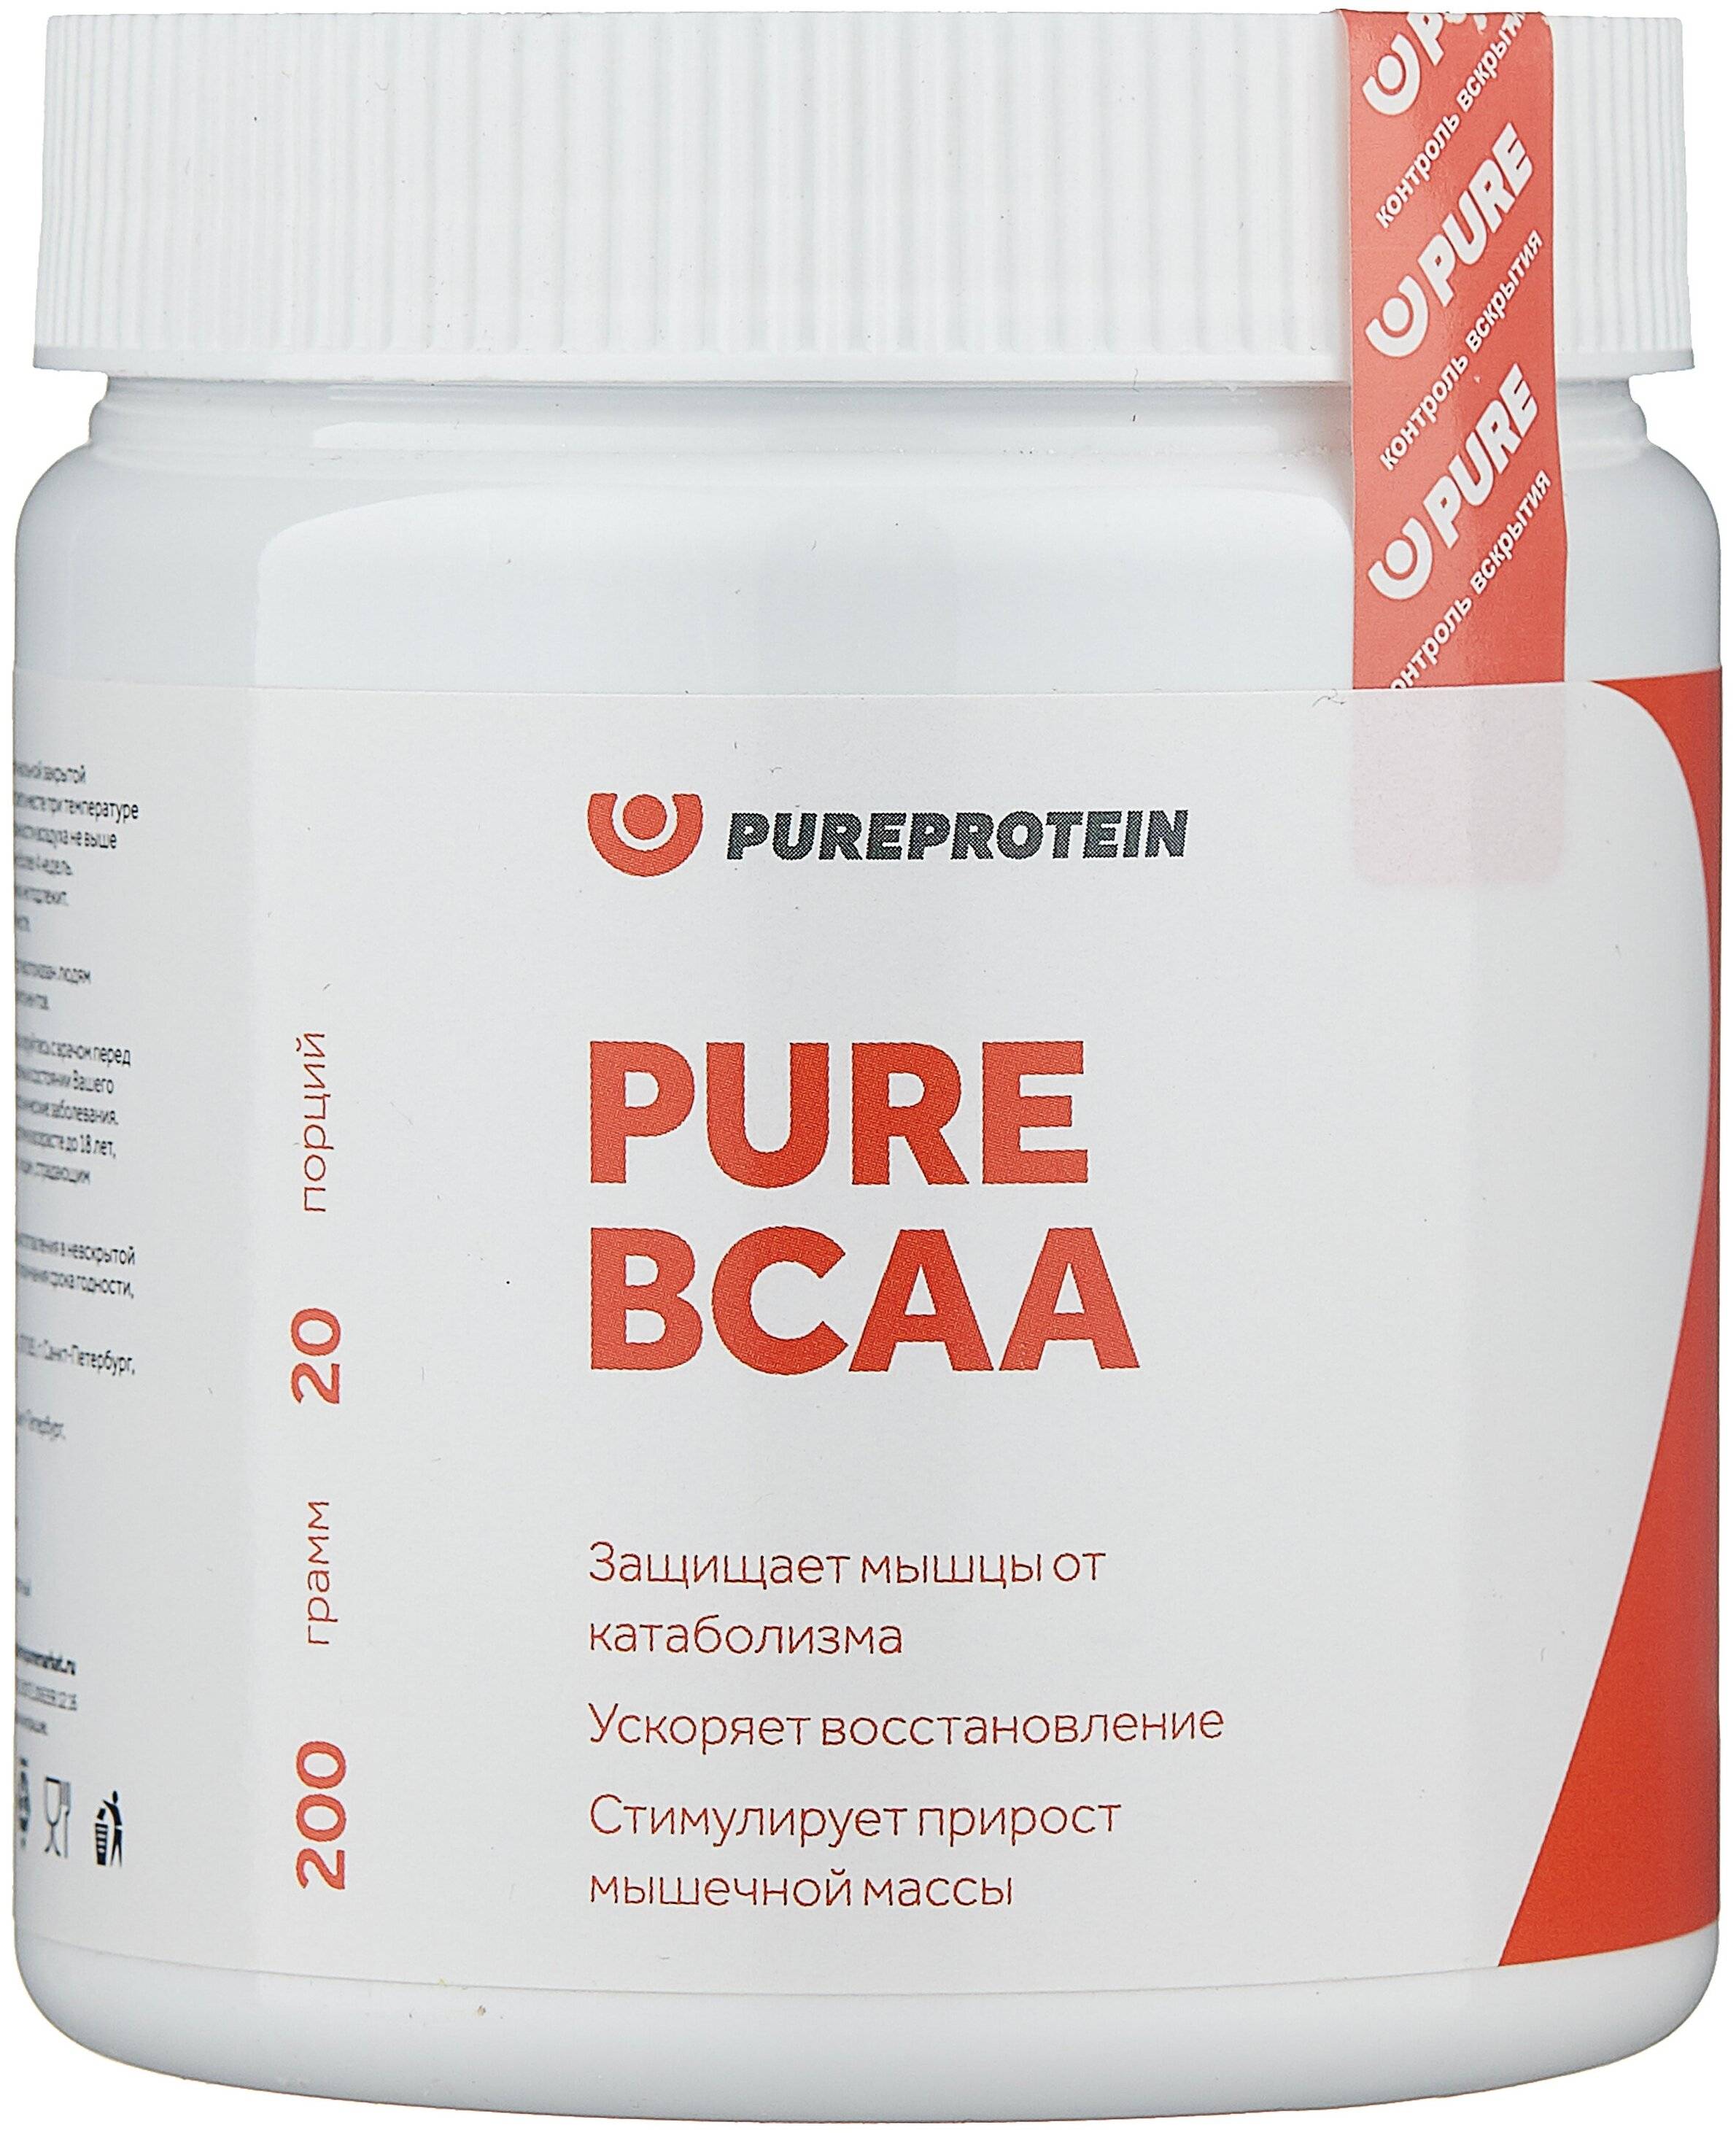 Pure bcaa от pureprotein